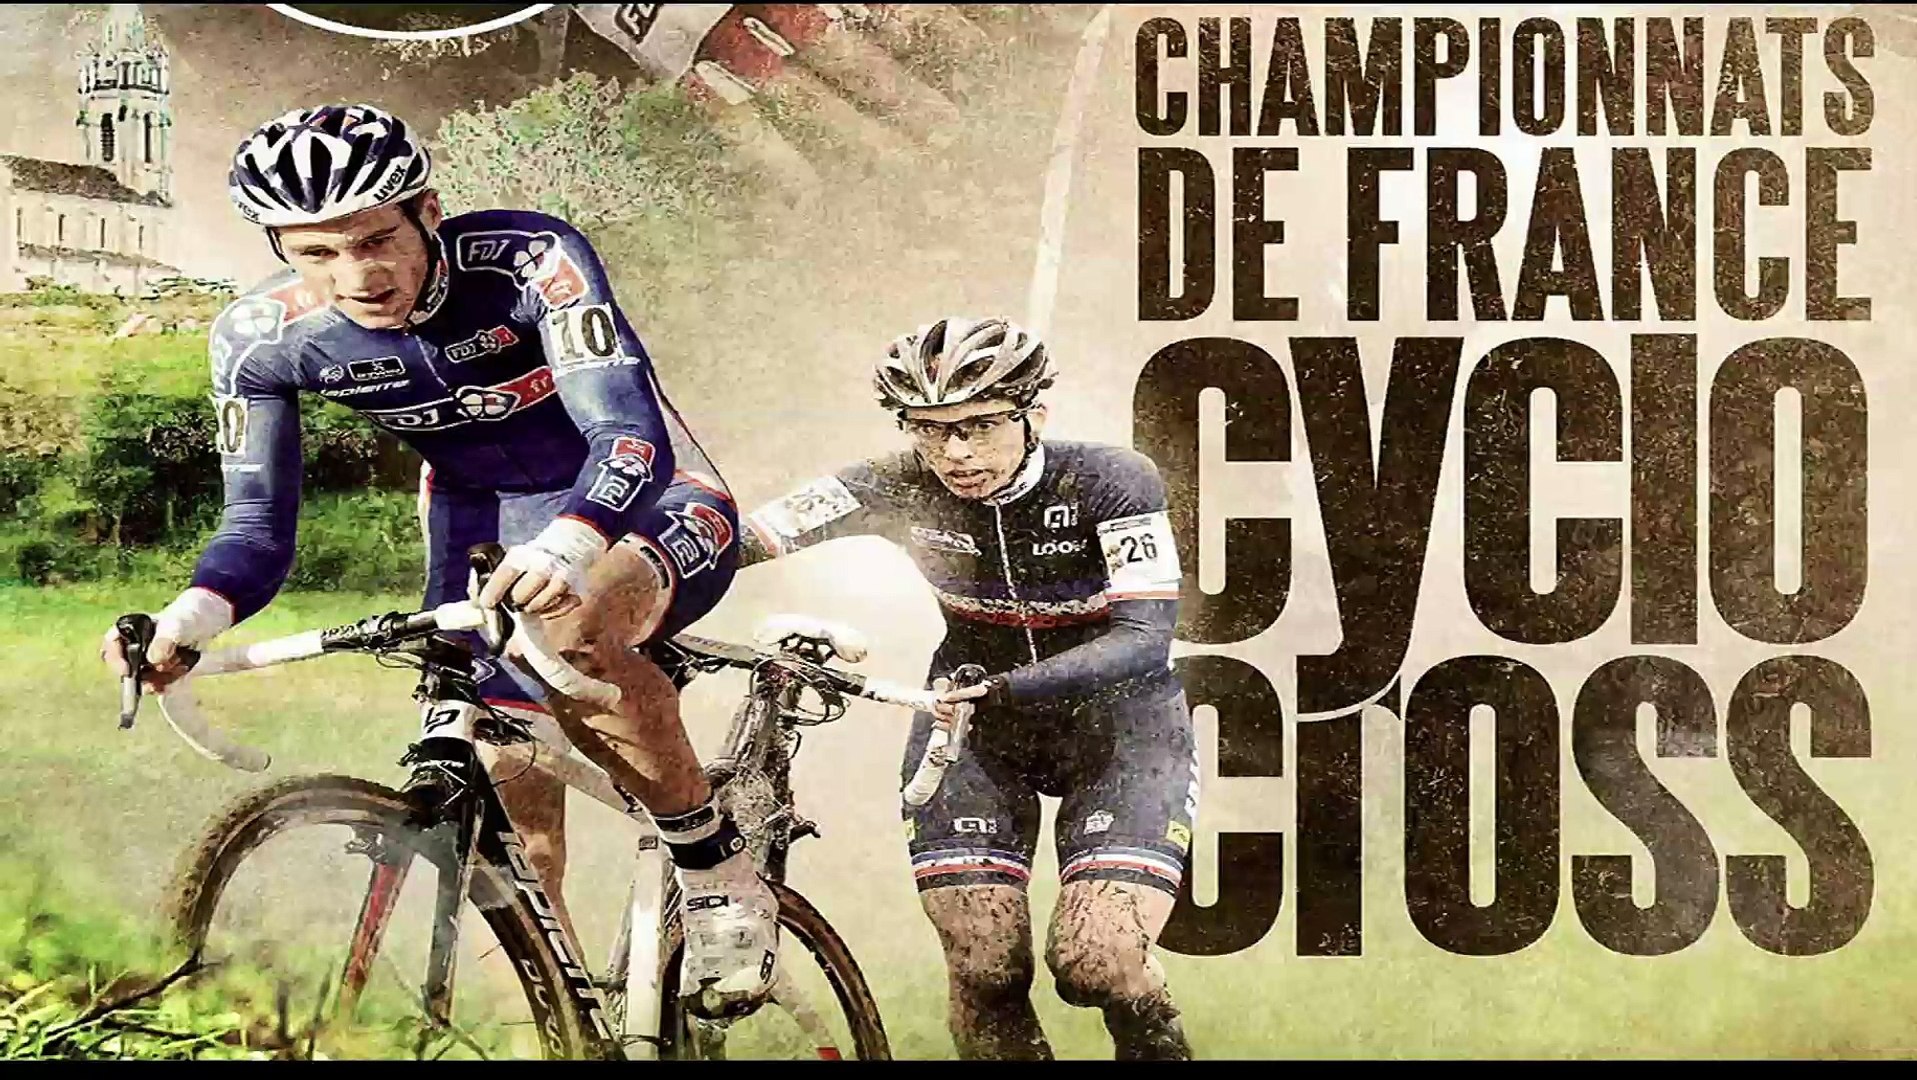 Championnats de France cyclo cross 2015 - Vidéo Dailymotion